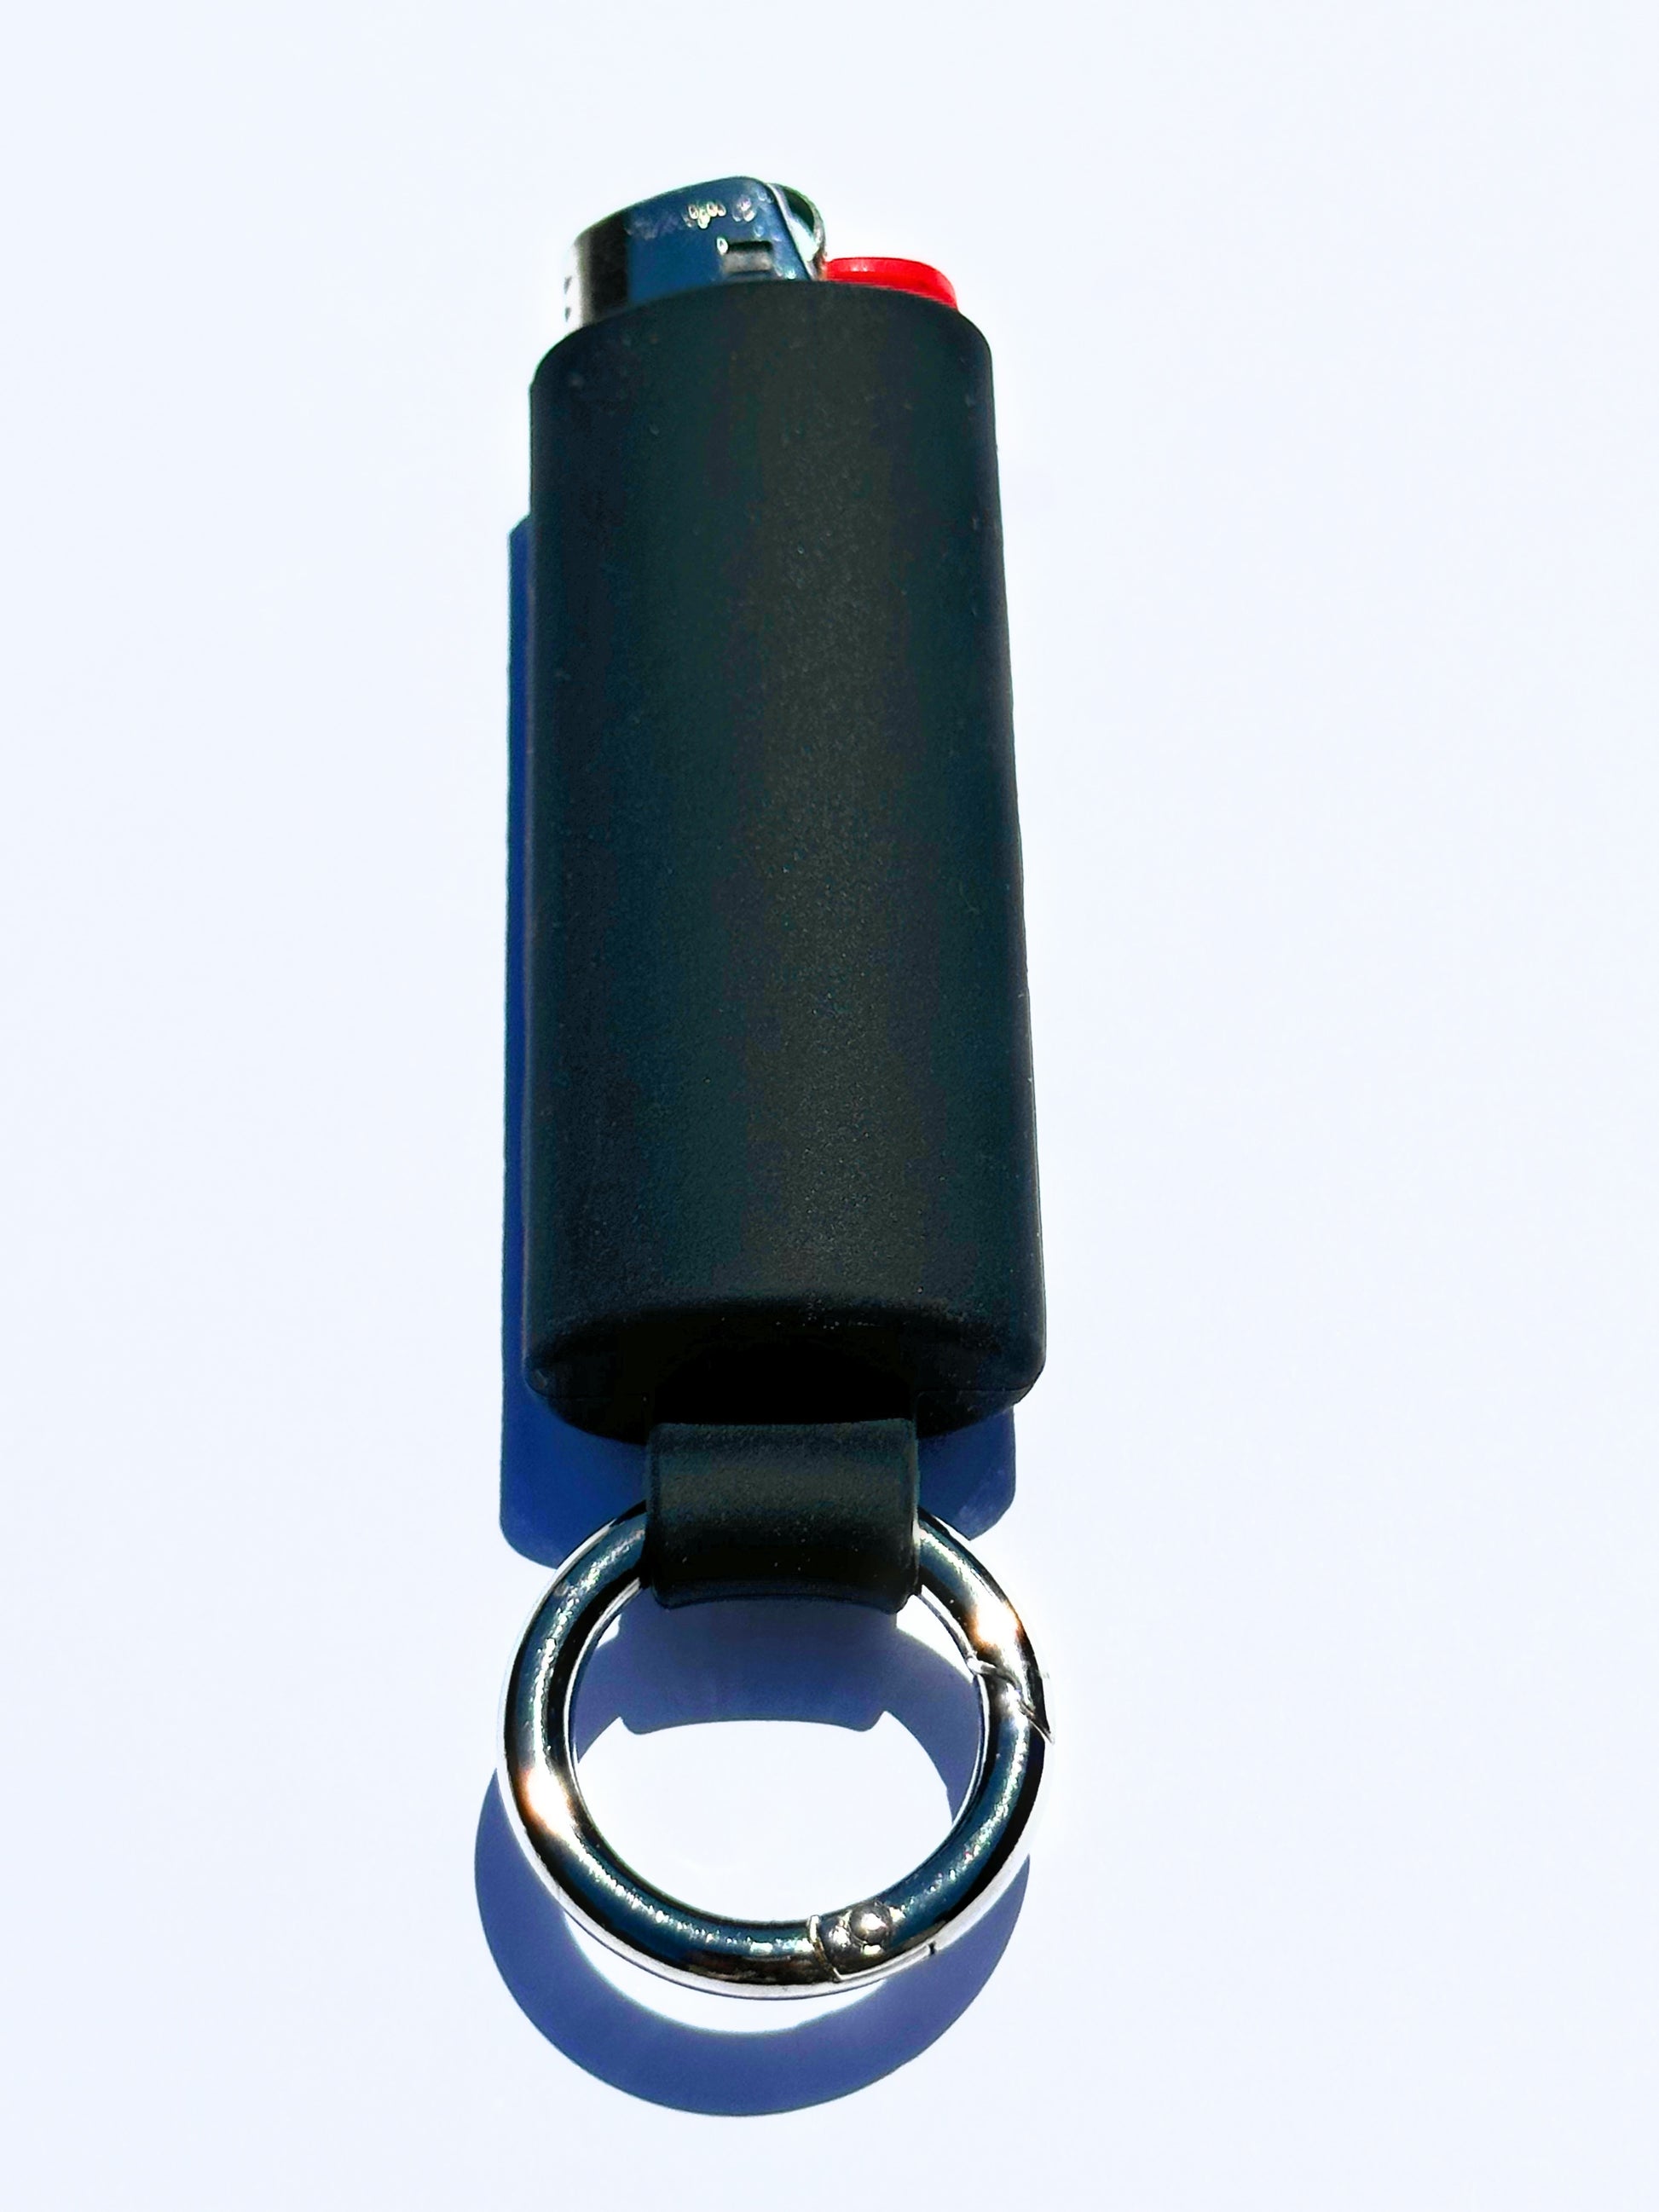 3 Packs - Lighter Locators - Lighter Holder Keychain with Spring Clip, Lighter  Case for BIC Lighters, Lighter Keychain Accessories